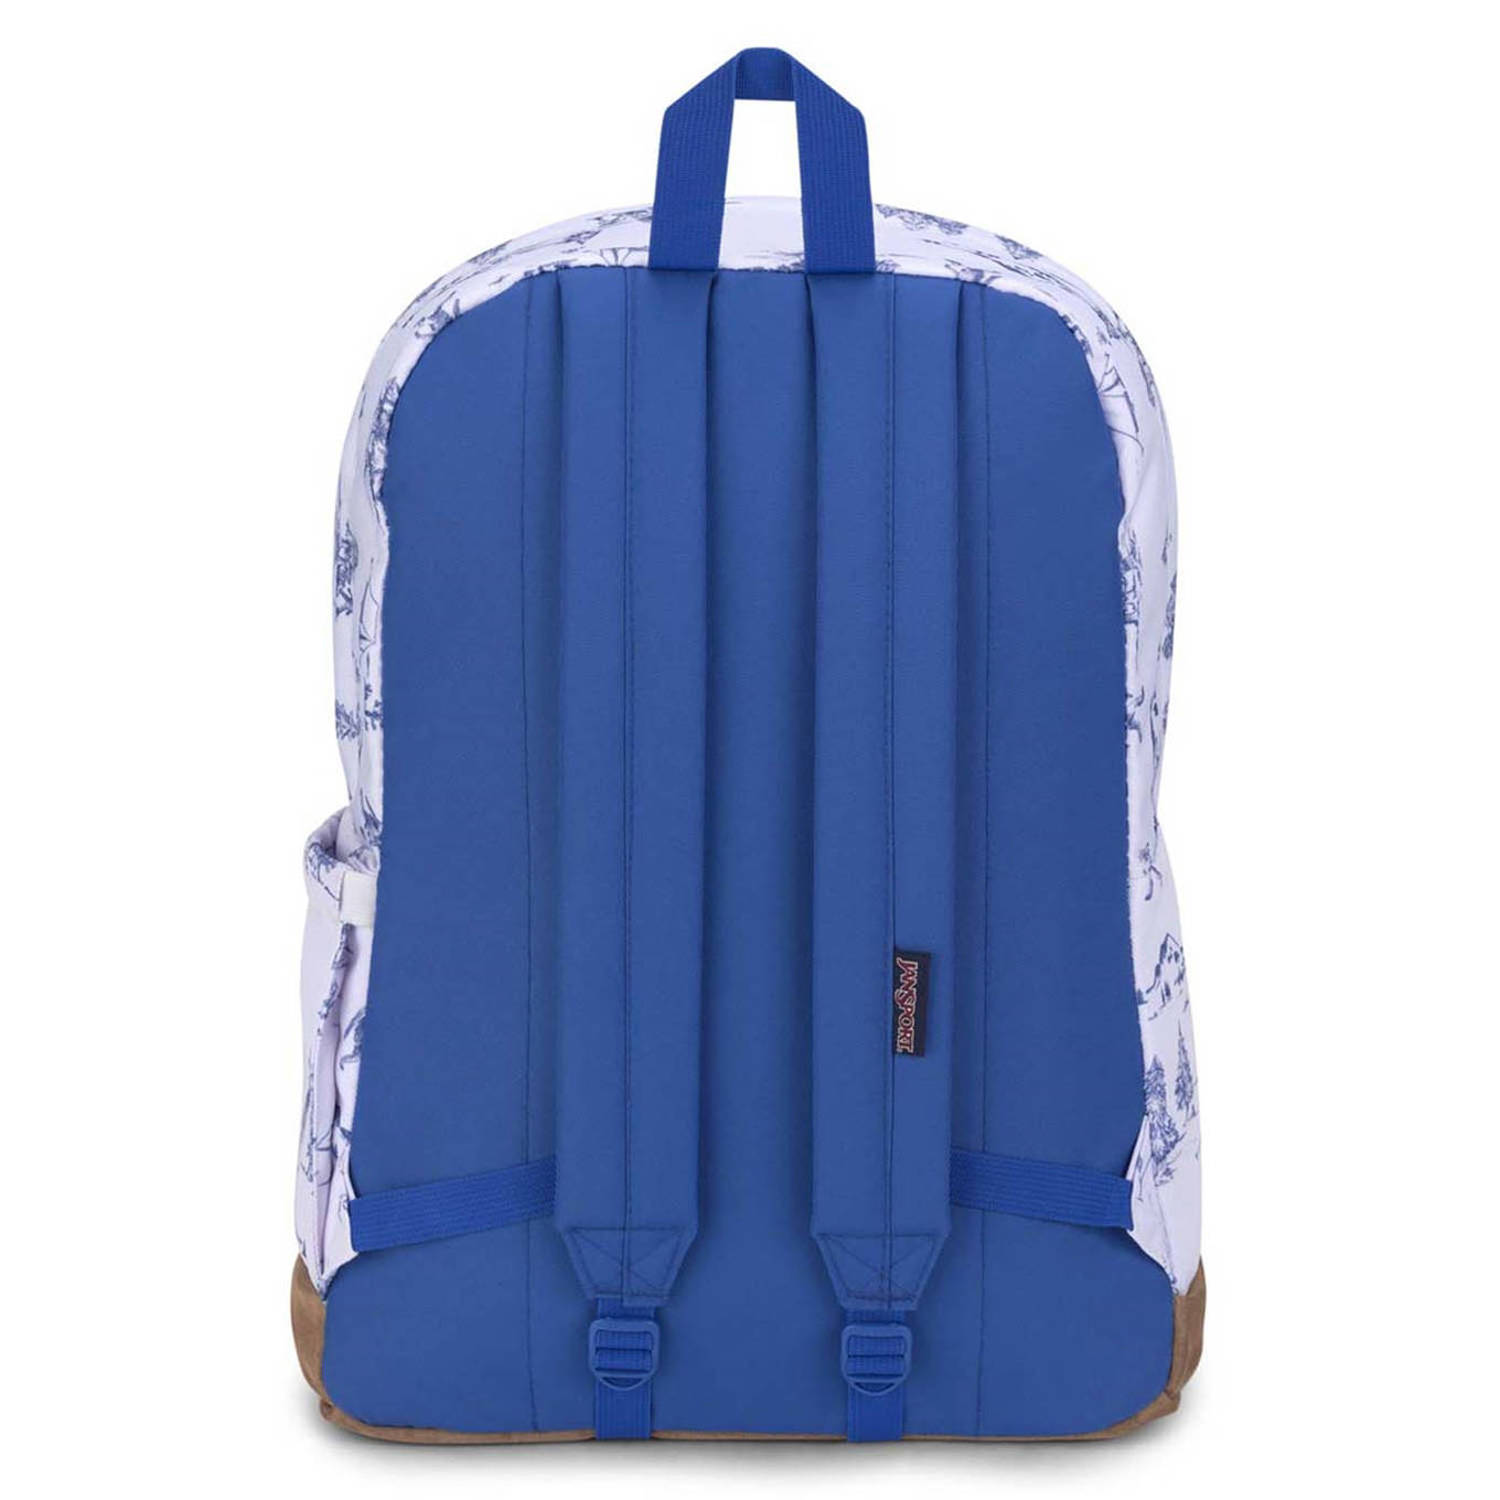 JanSport rugzak Right Pack wit blauw